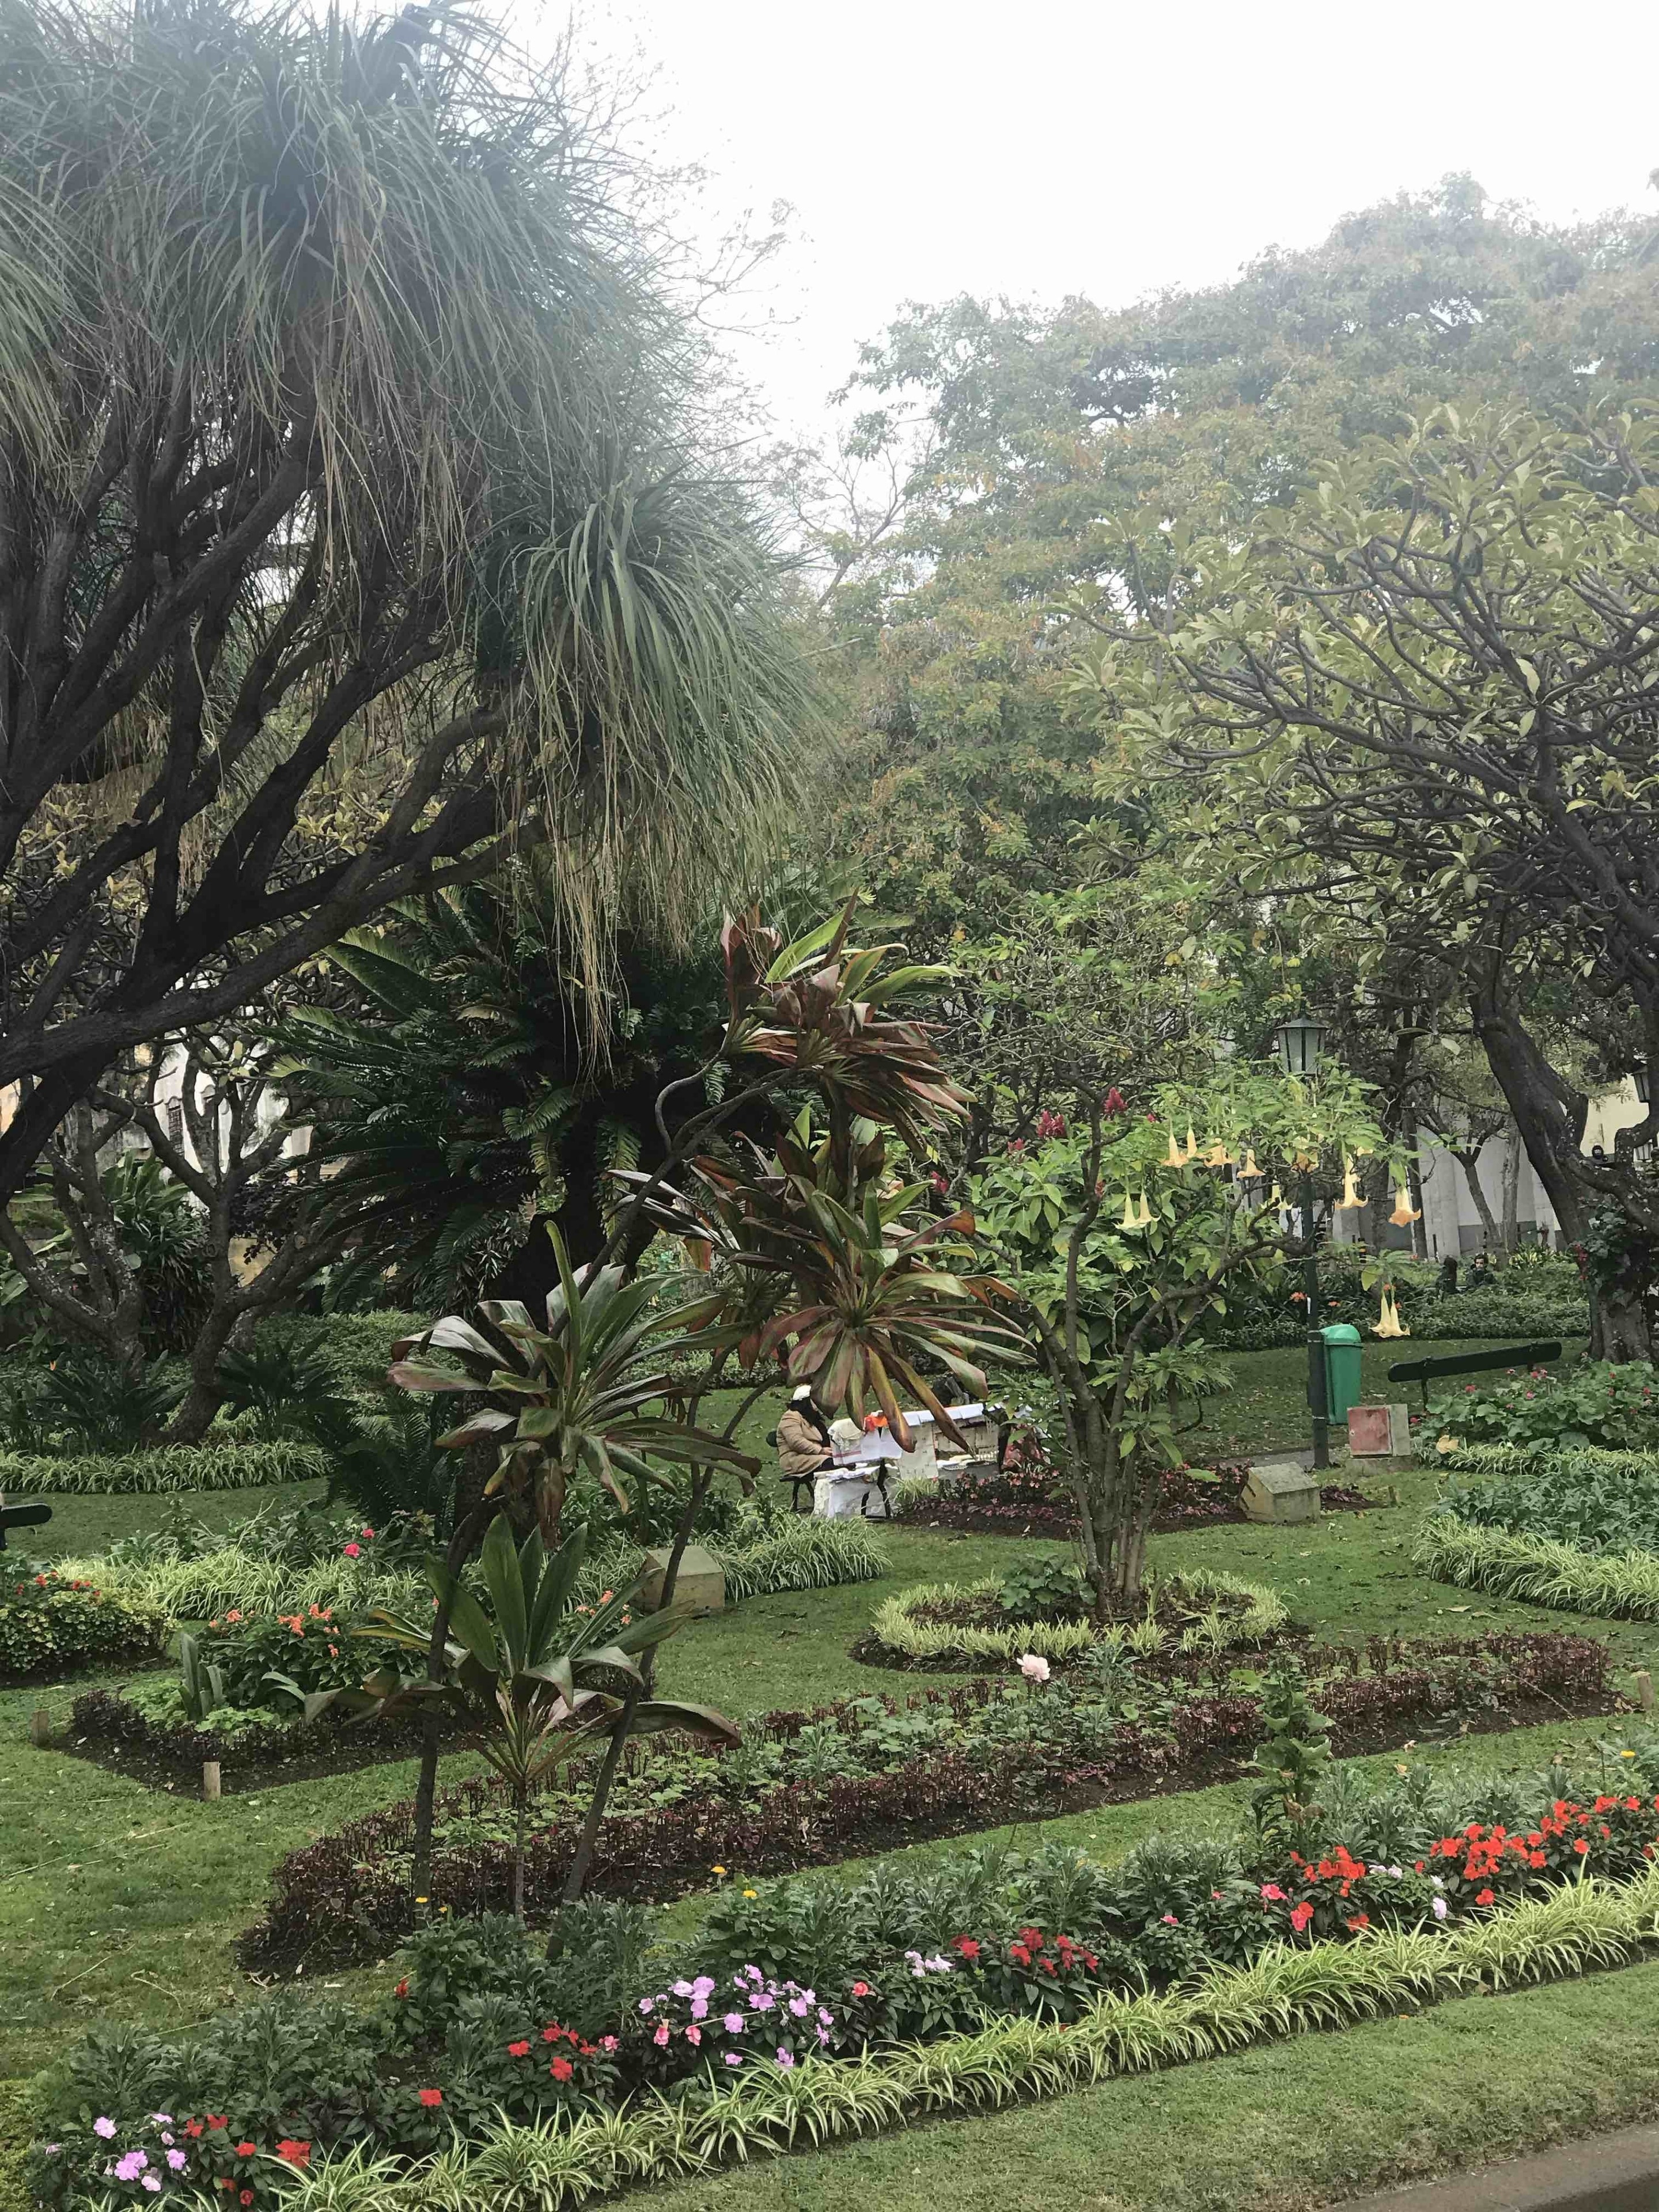 Public garden on the island of flowers 
#lifeatexpedia